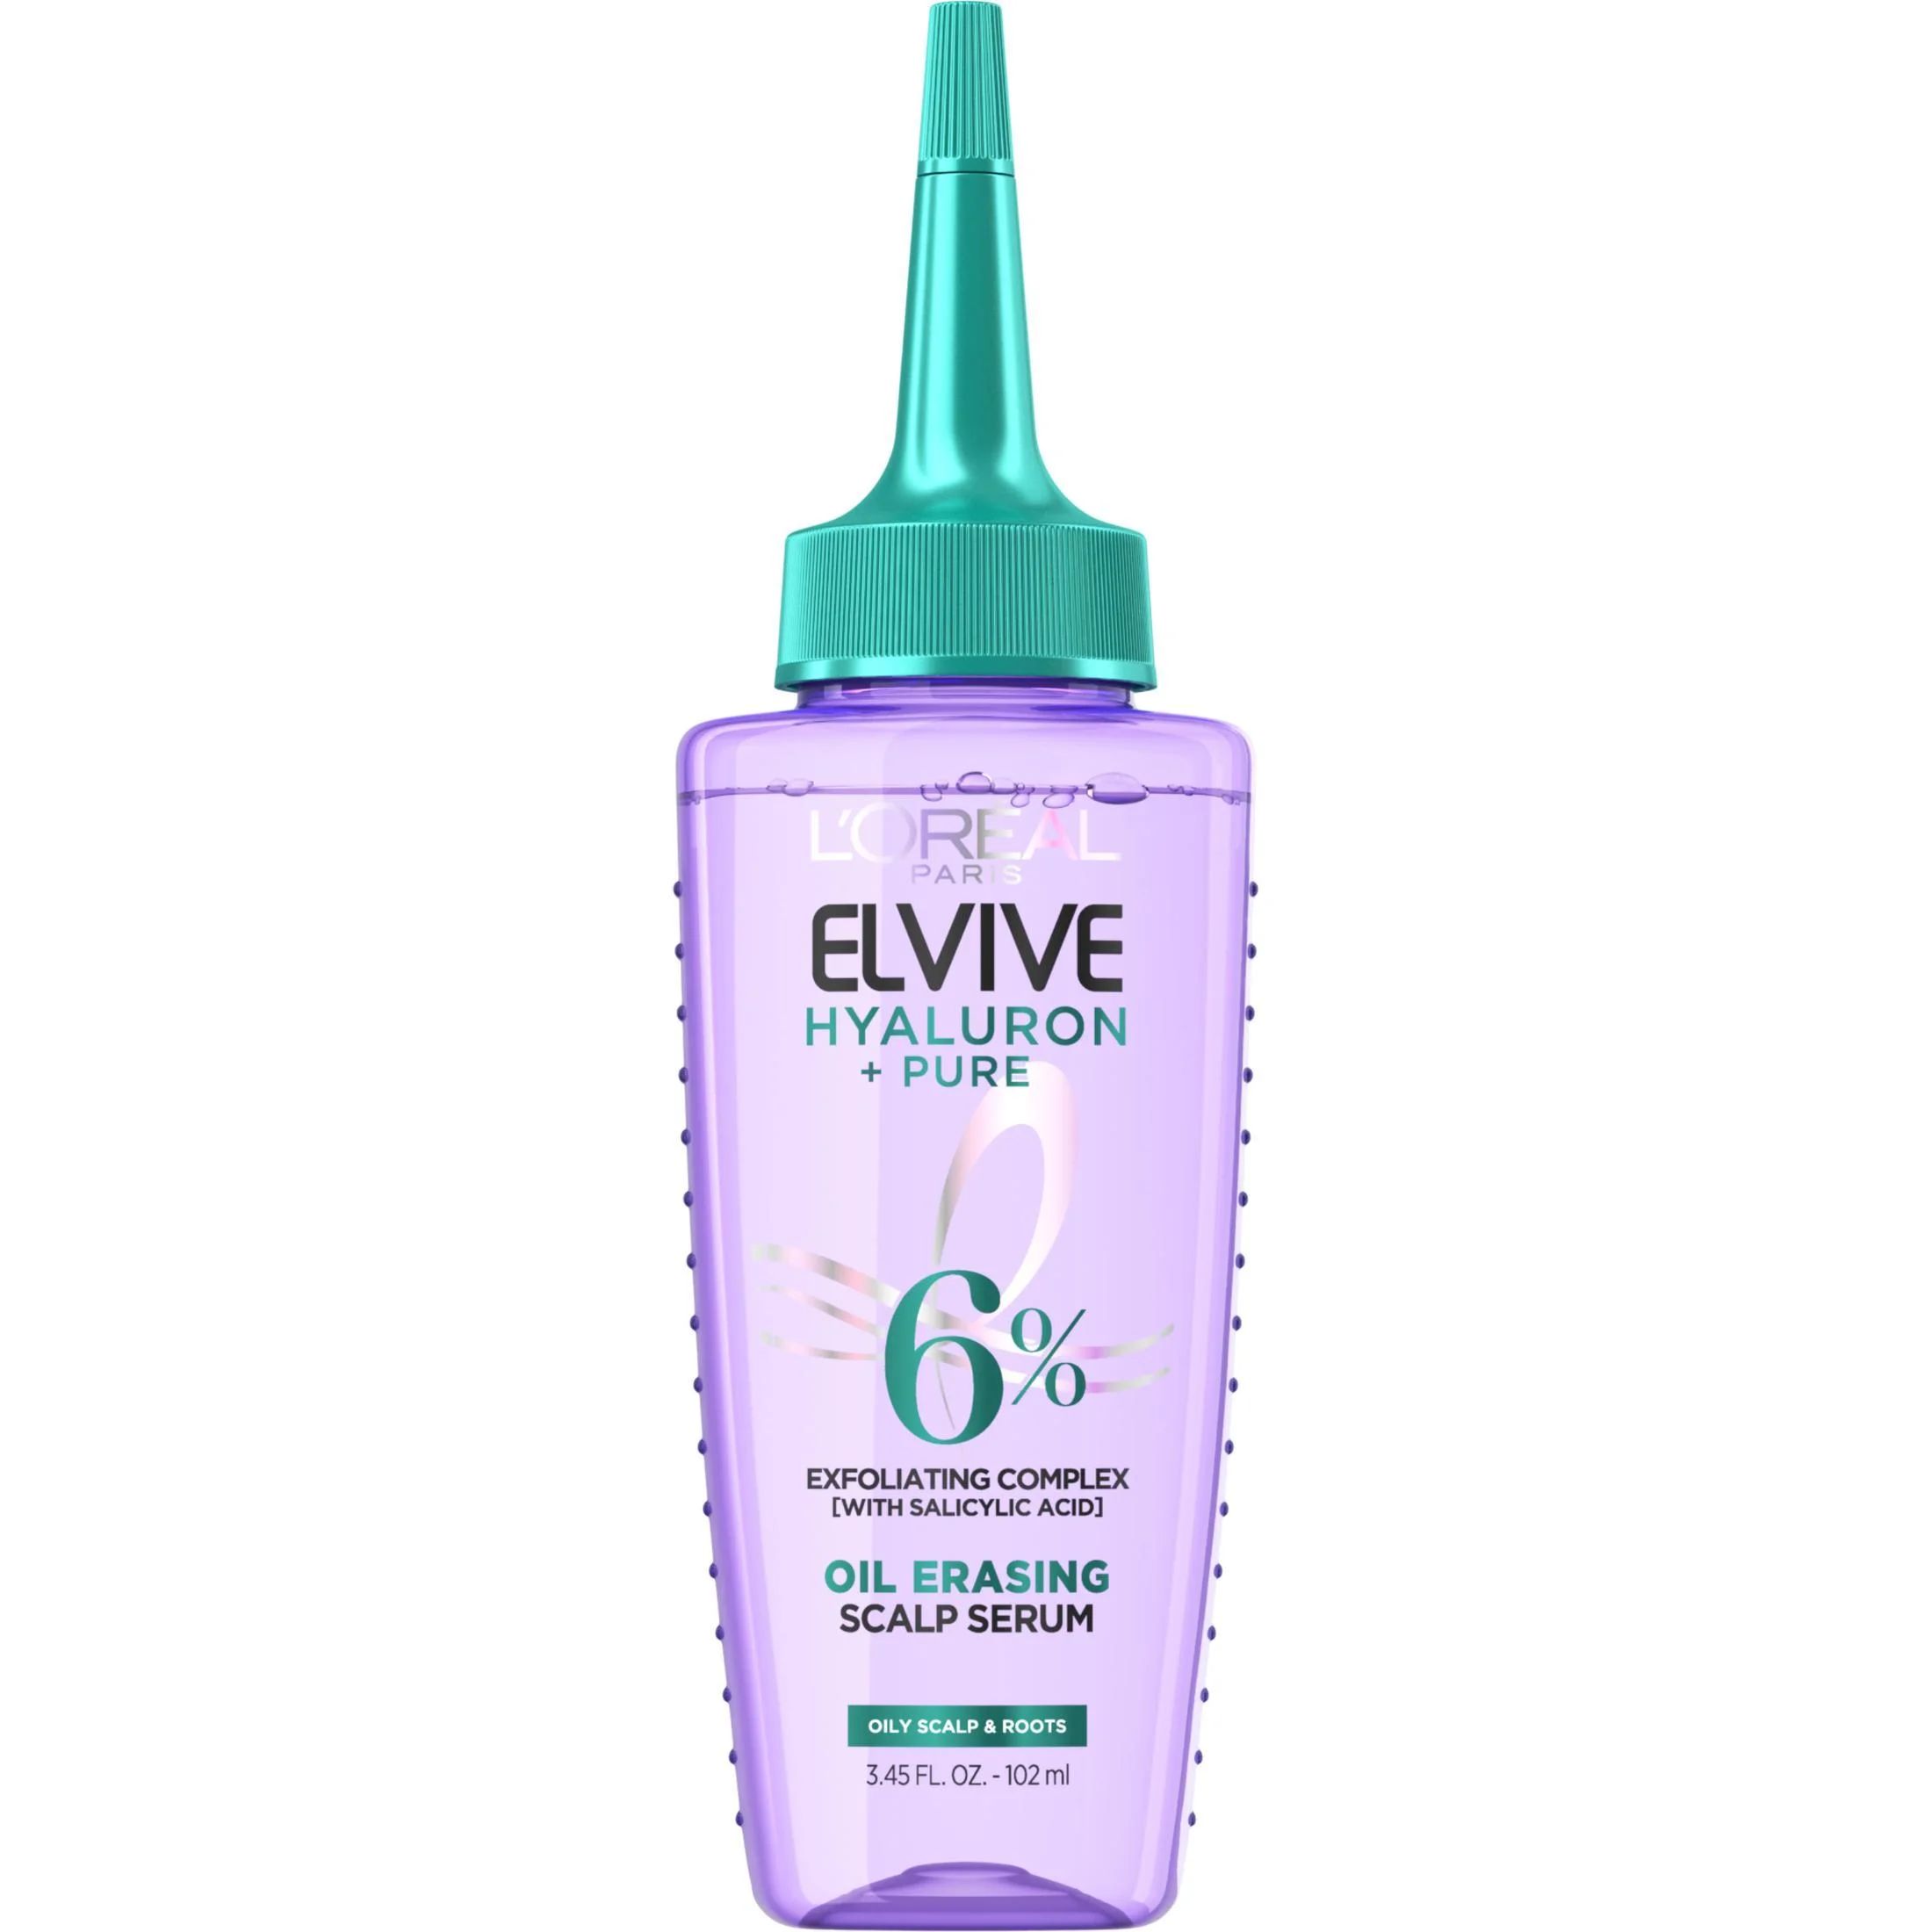 L'Oreal Paris Elvive Hyaluron Pure Oil Erasing Serum for Oily Hair, 3.45 fl oz | Walmart (US)